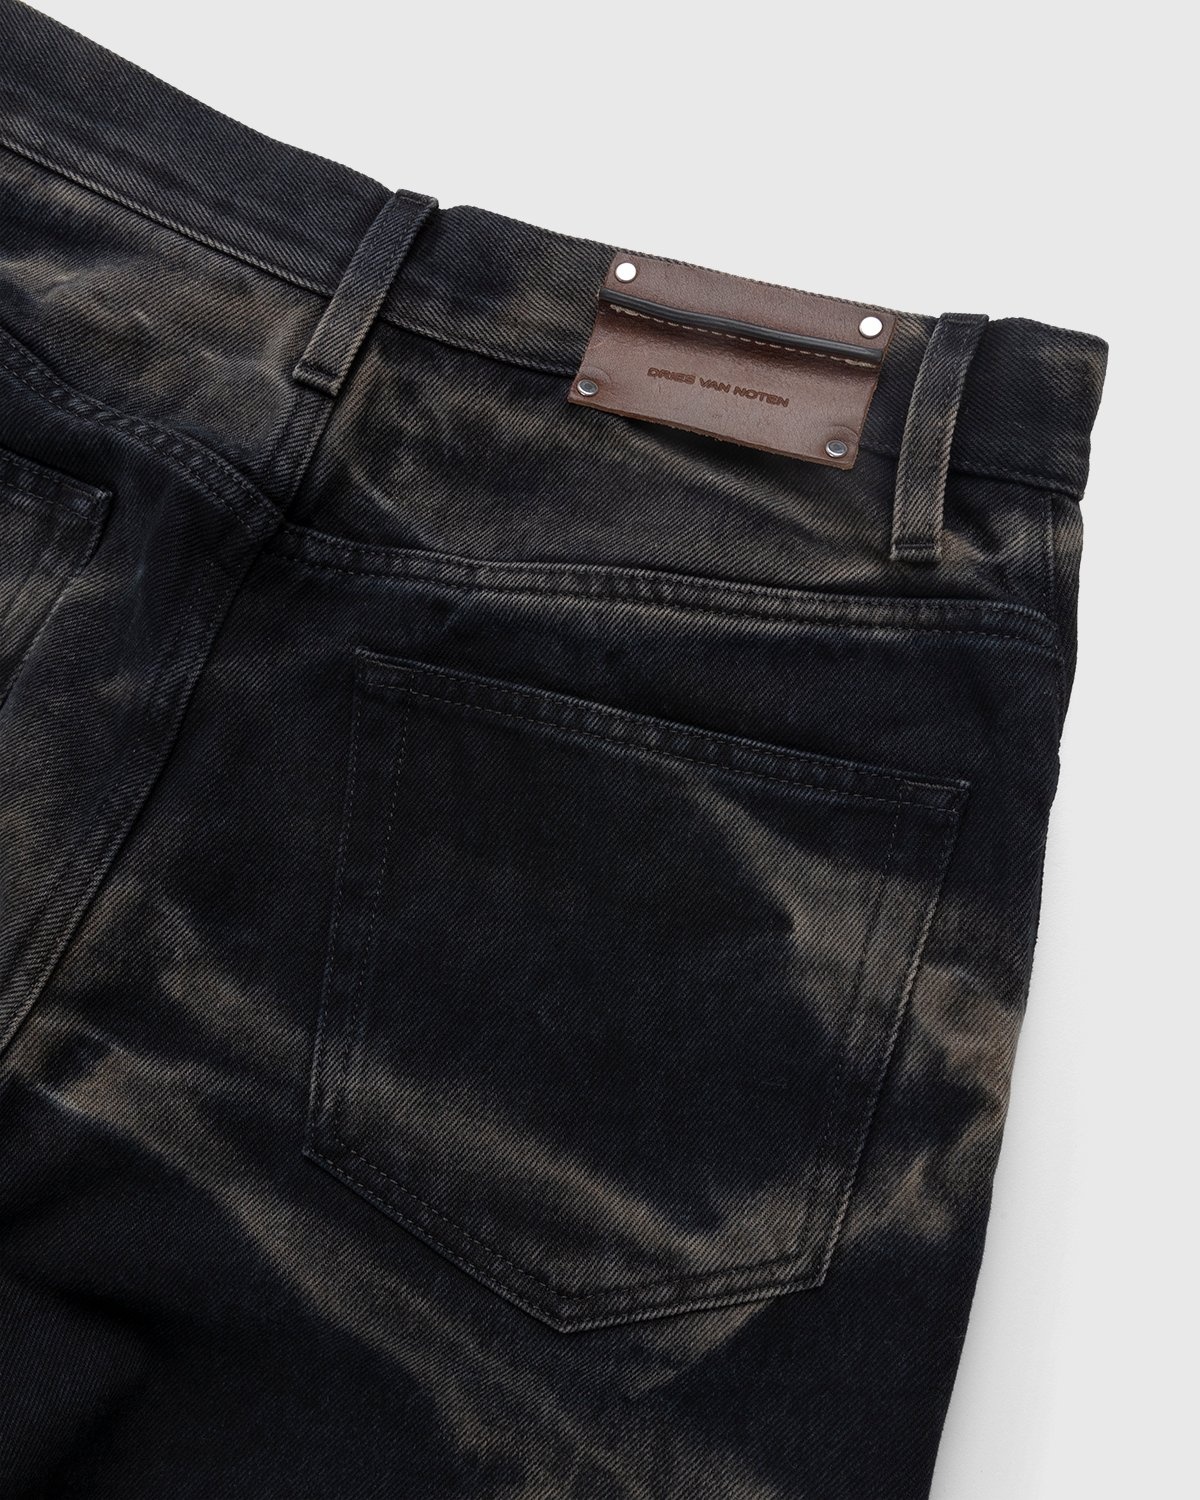 Dries van Noten – Pine Acid Wash Jeans Black - Pants - Black - Image 3